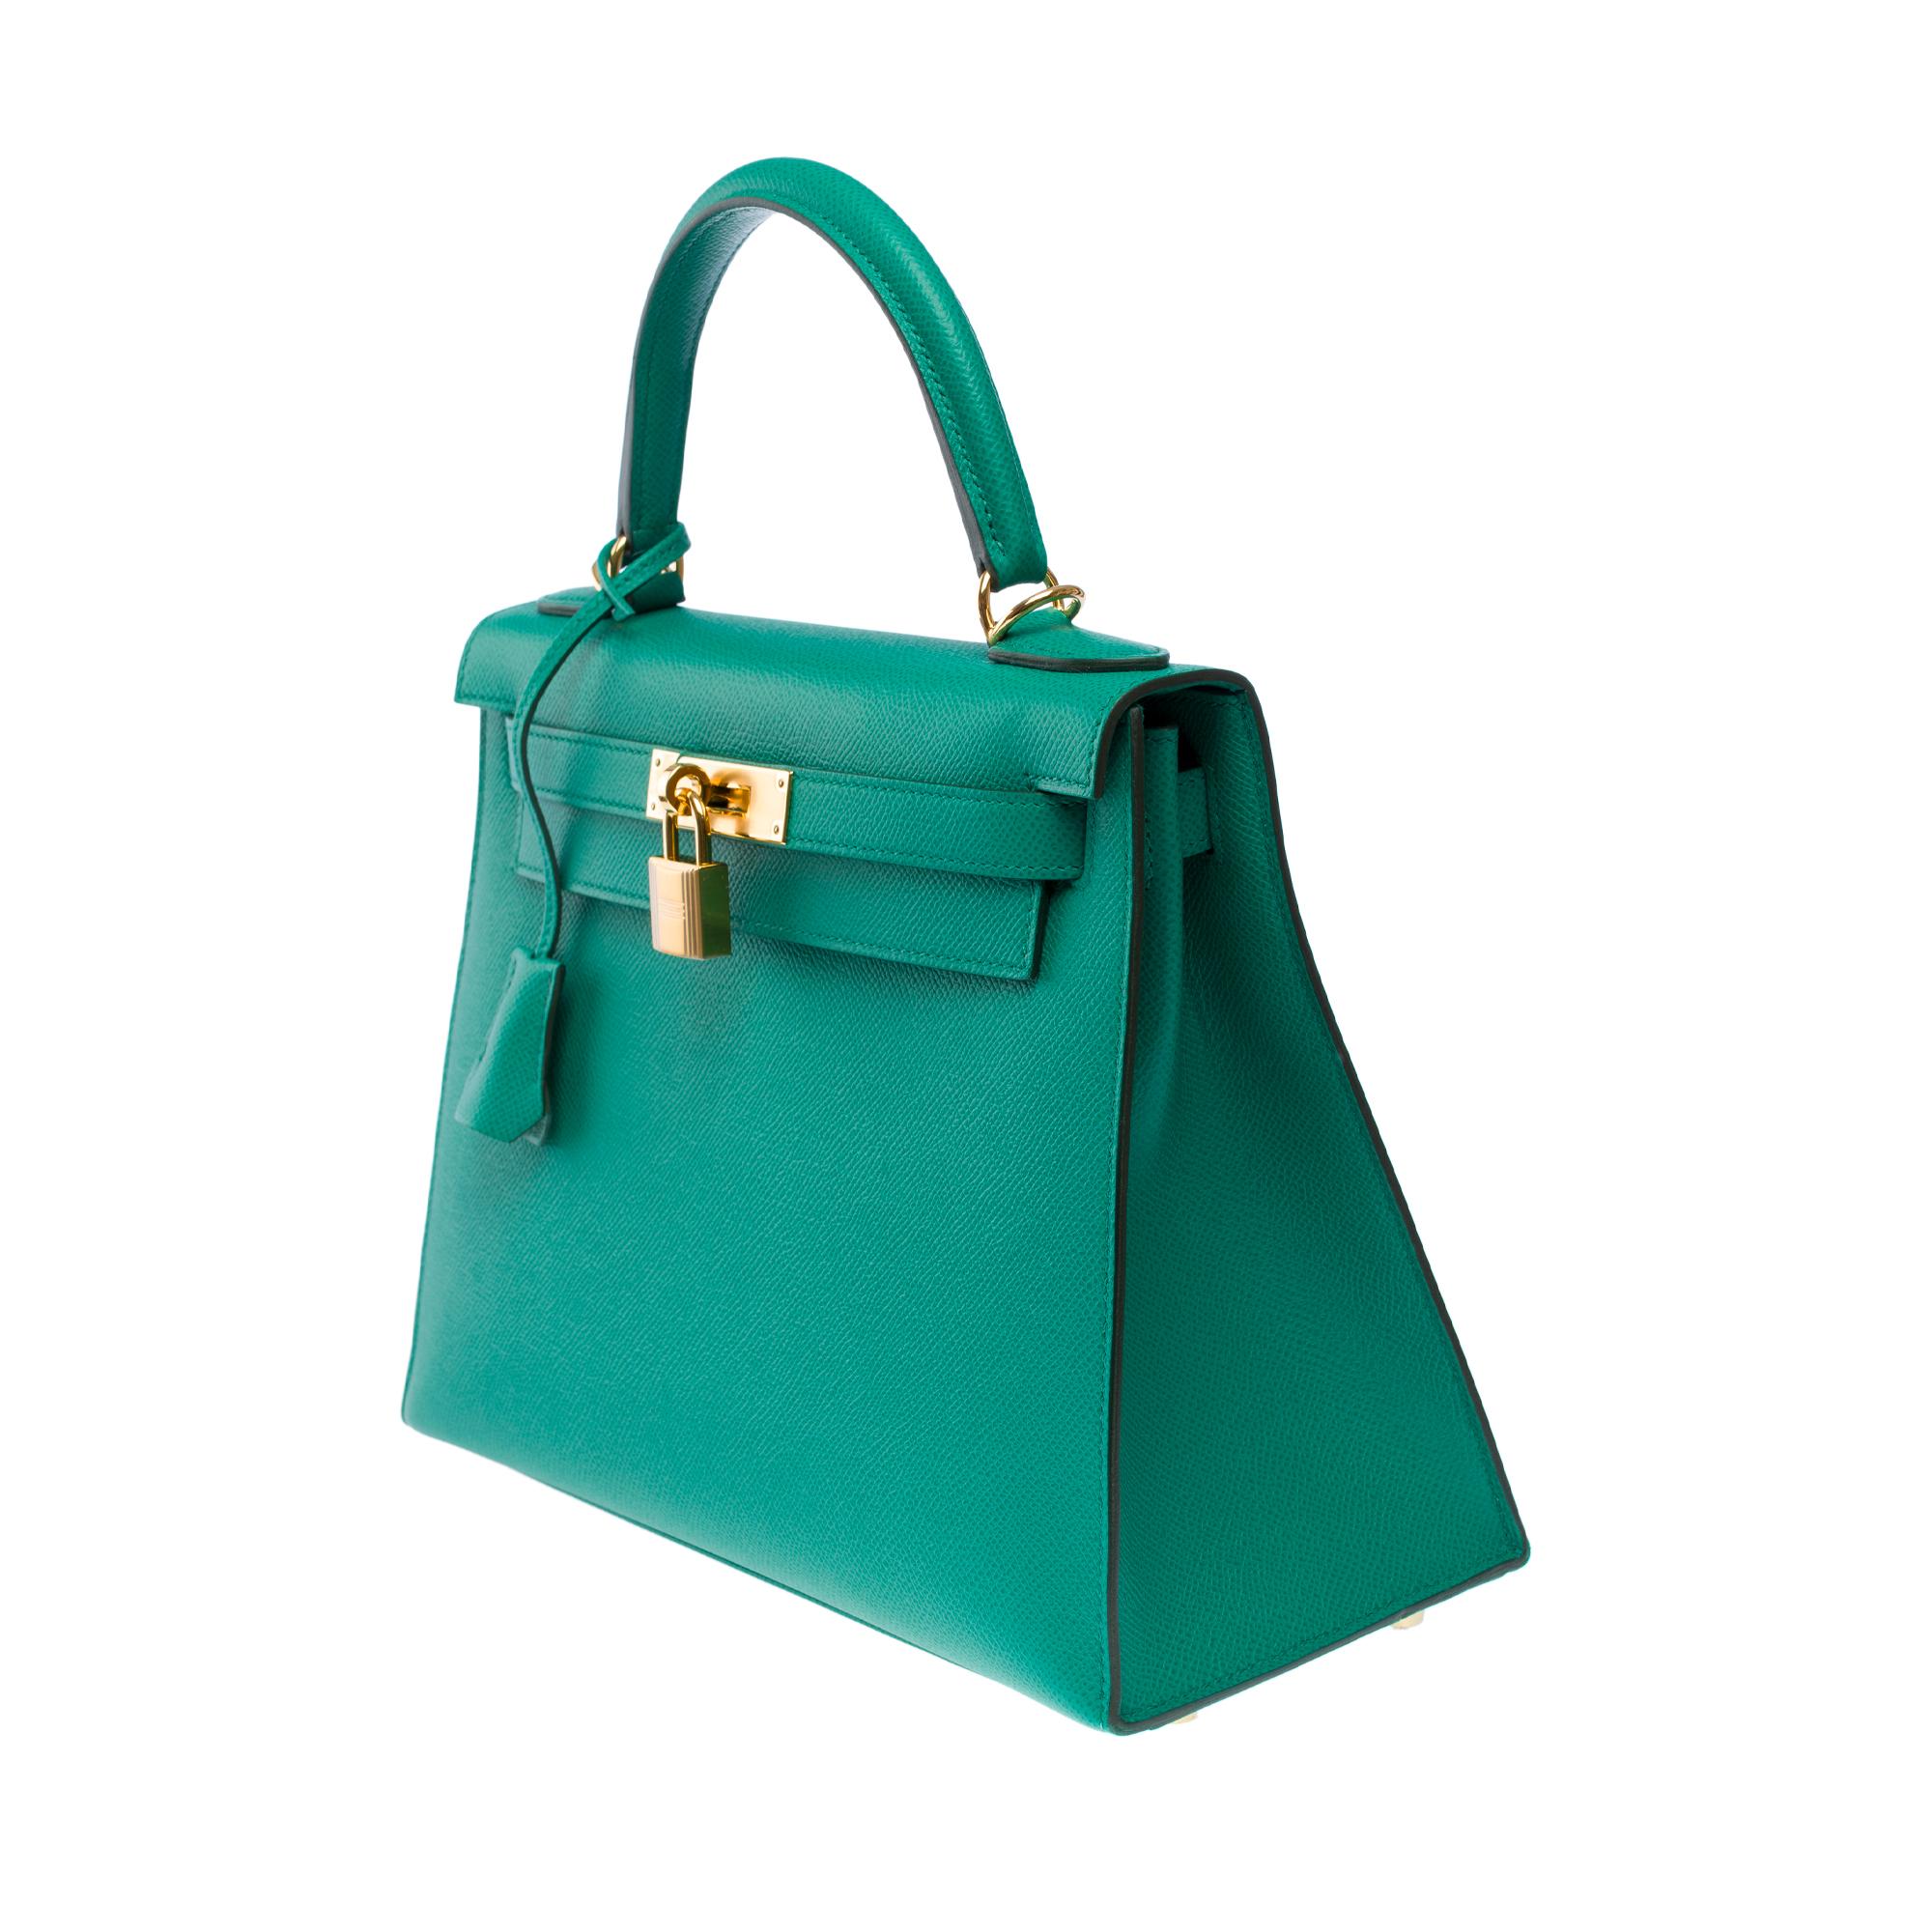 New Hermès Kelly 28 sellier handbag strap in Vert Jade Epsom leather, GHW For Sale 1